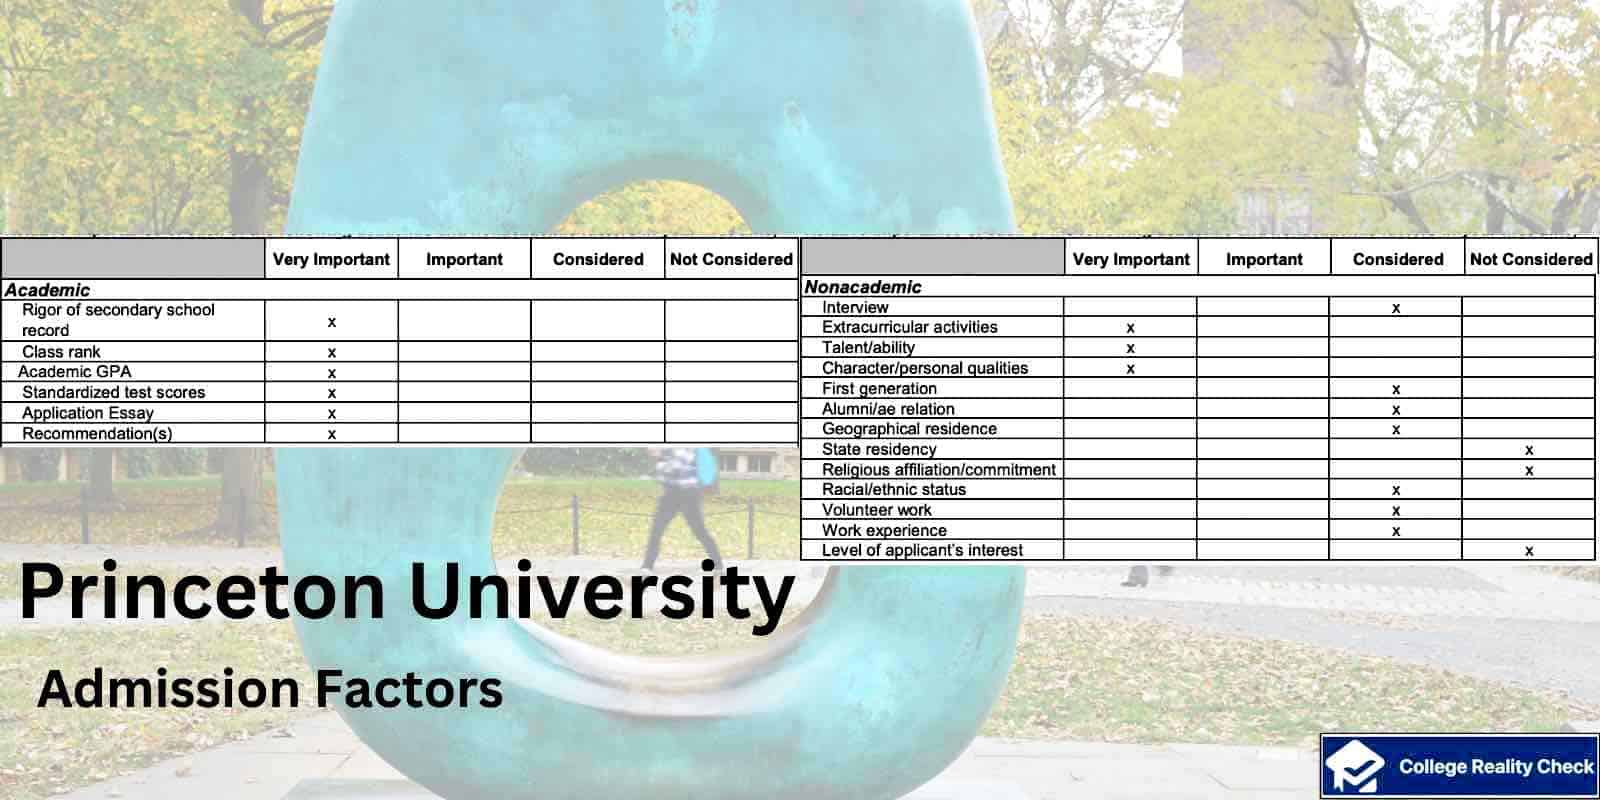 Princeton University Admission factors from Common Data Set